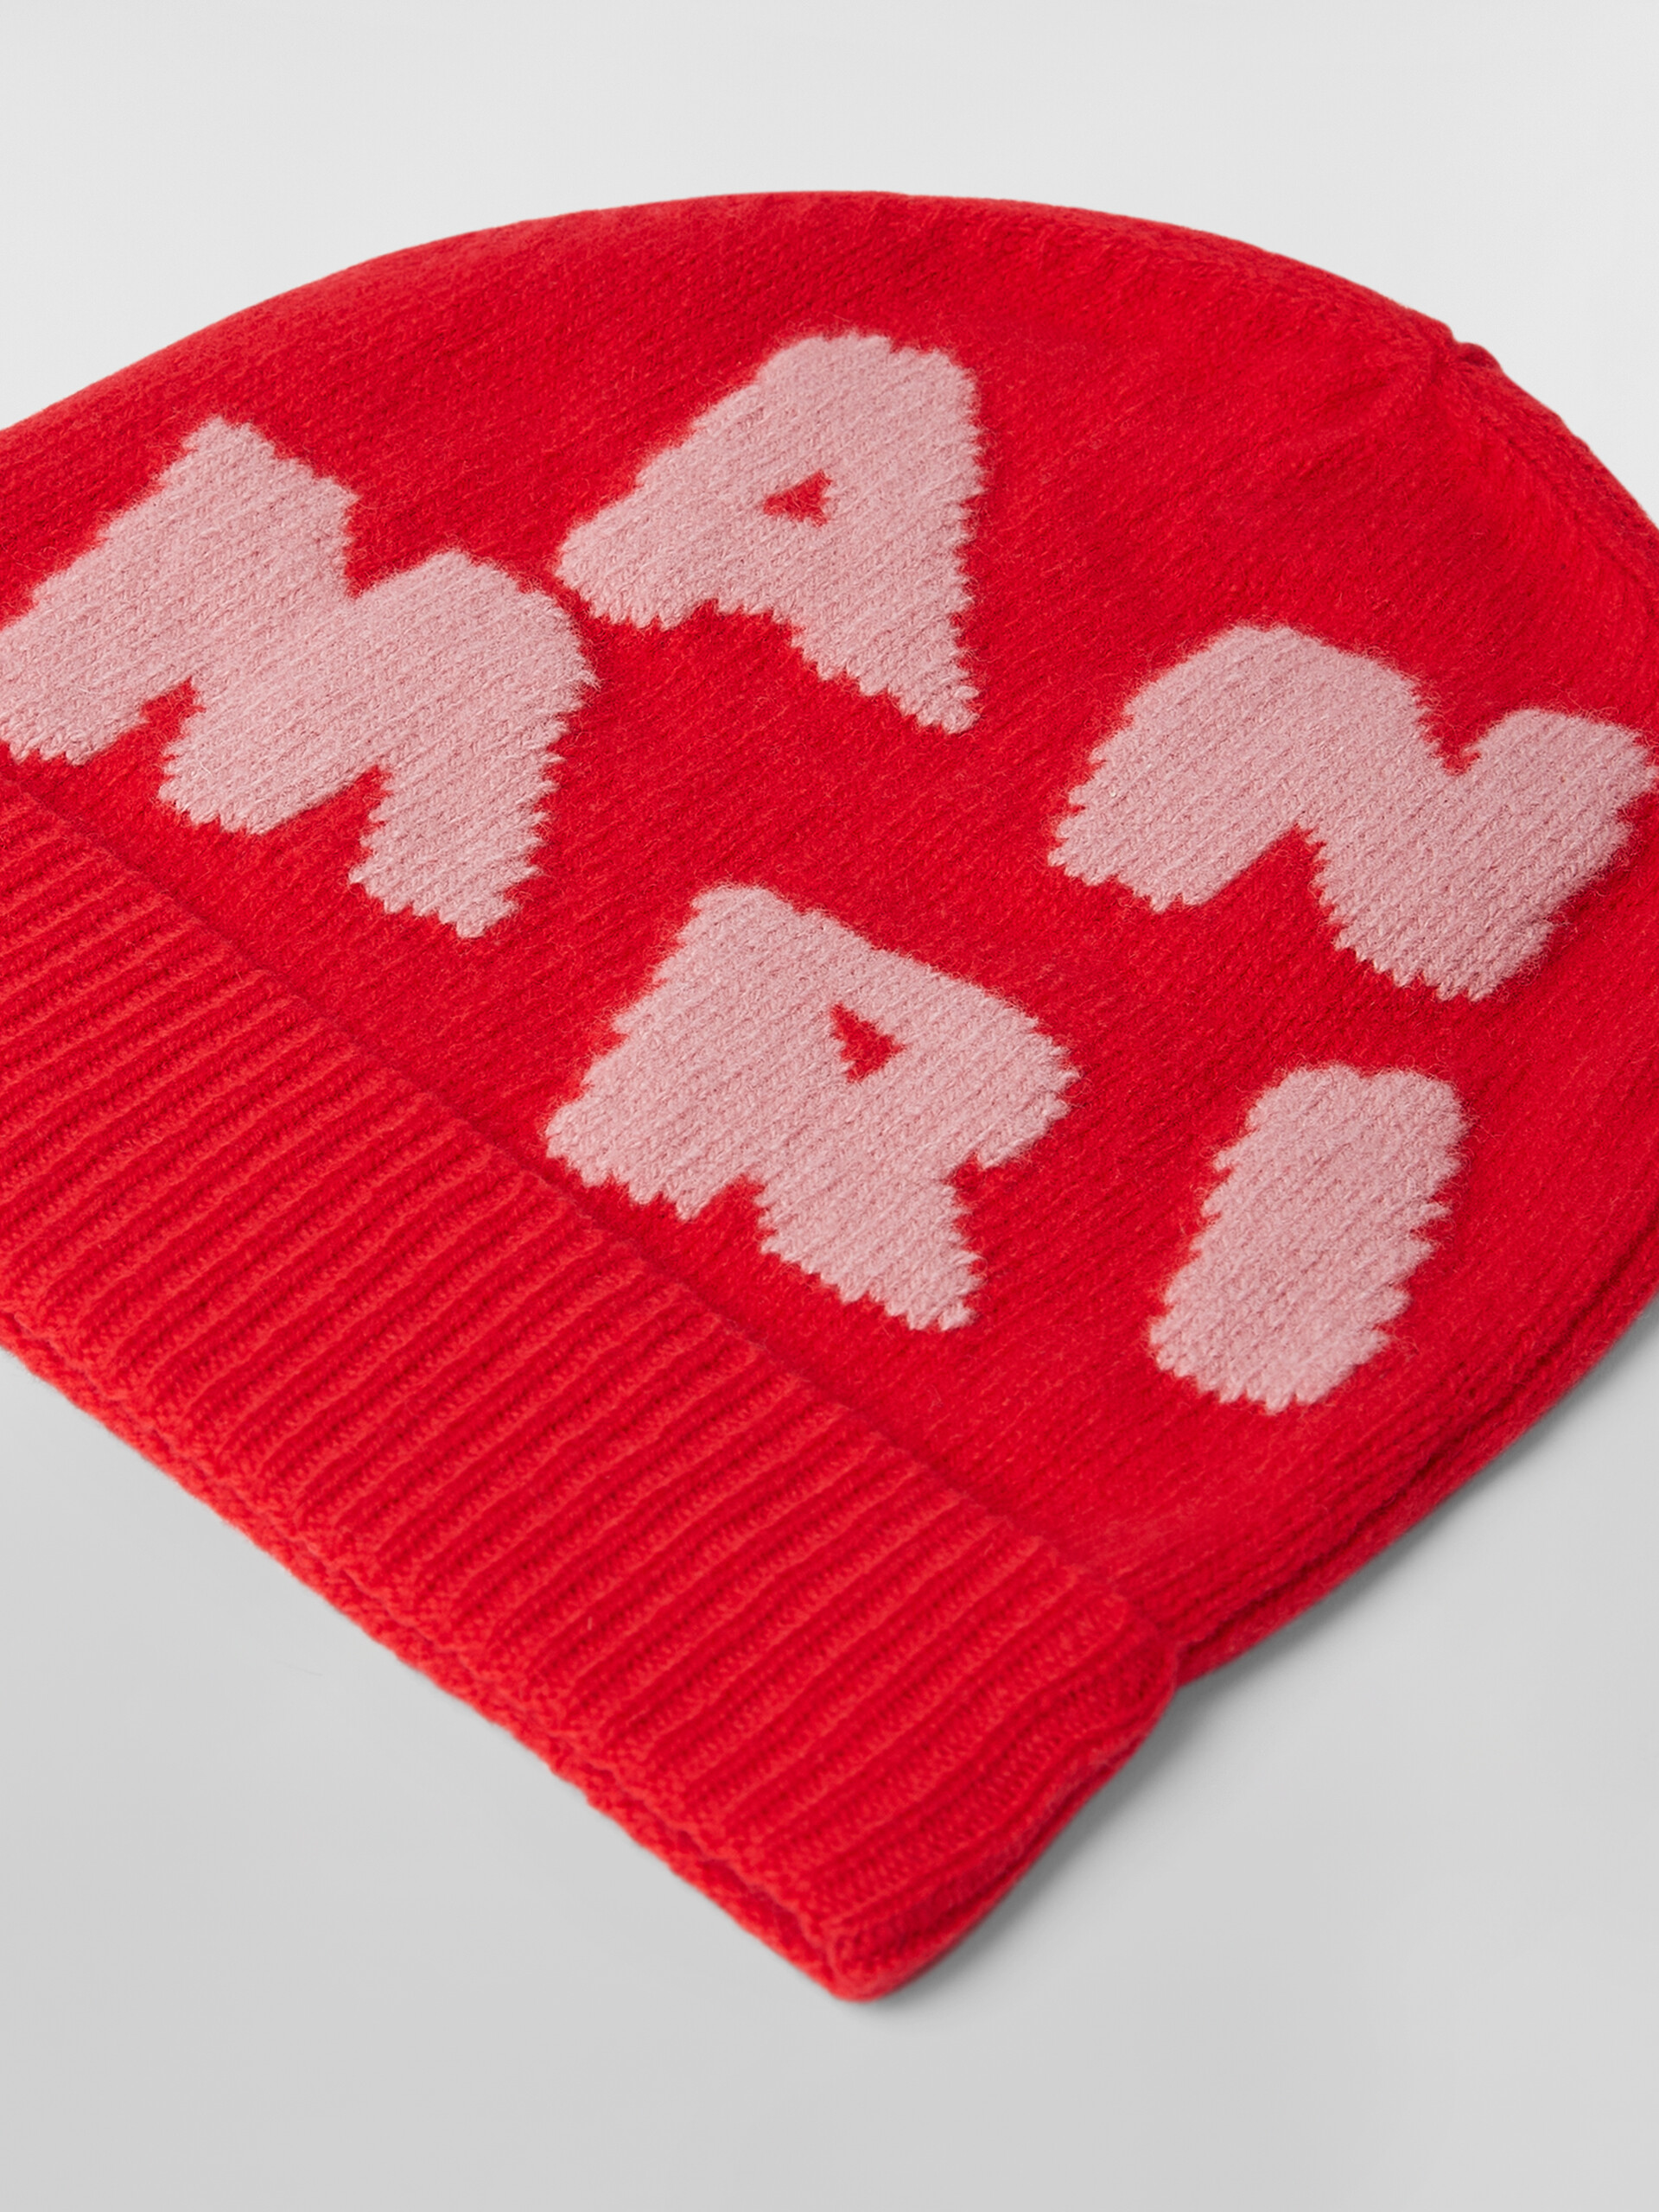 WOOL CAP WITH MAXI LOGO - Caps - Image 2